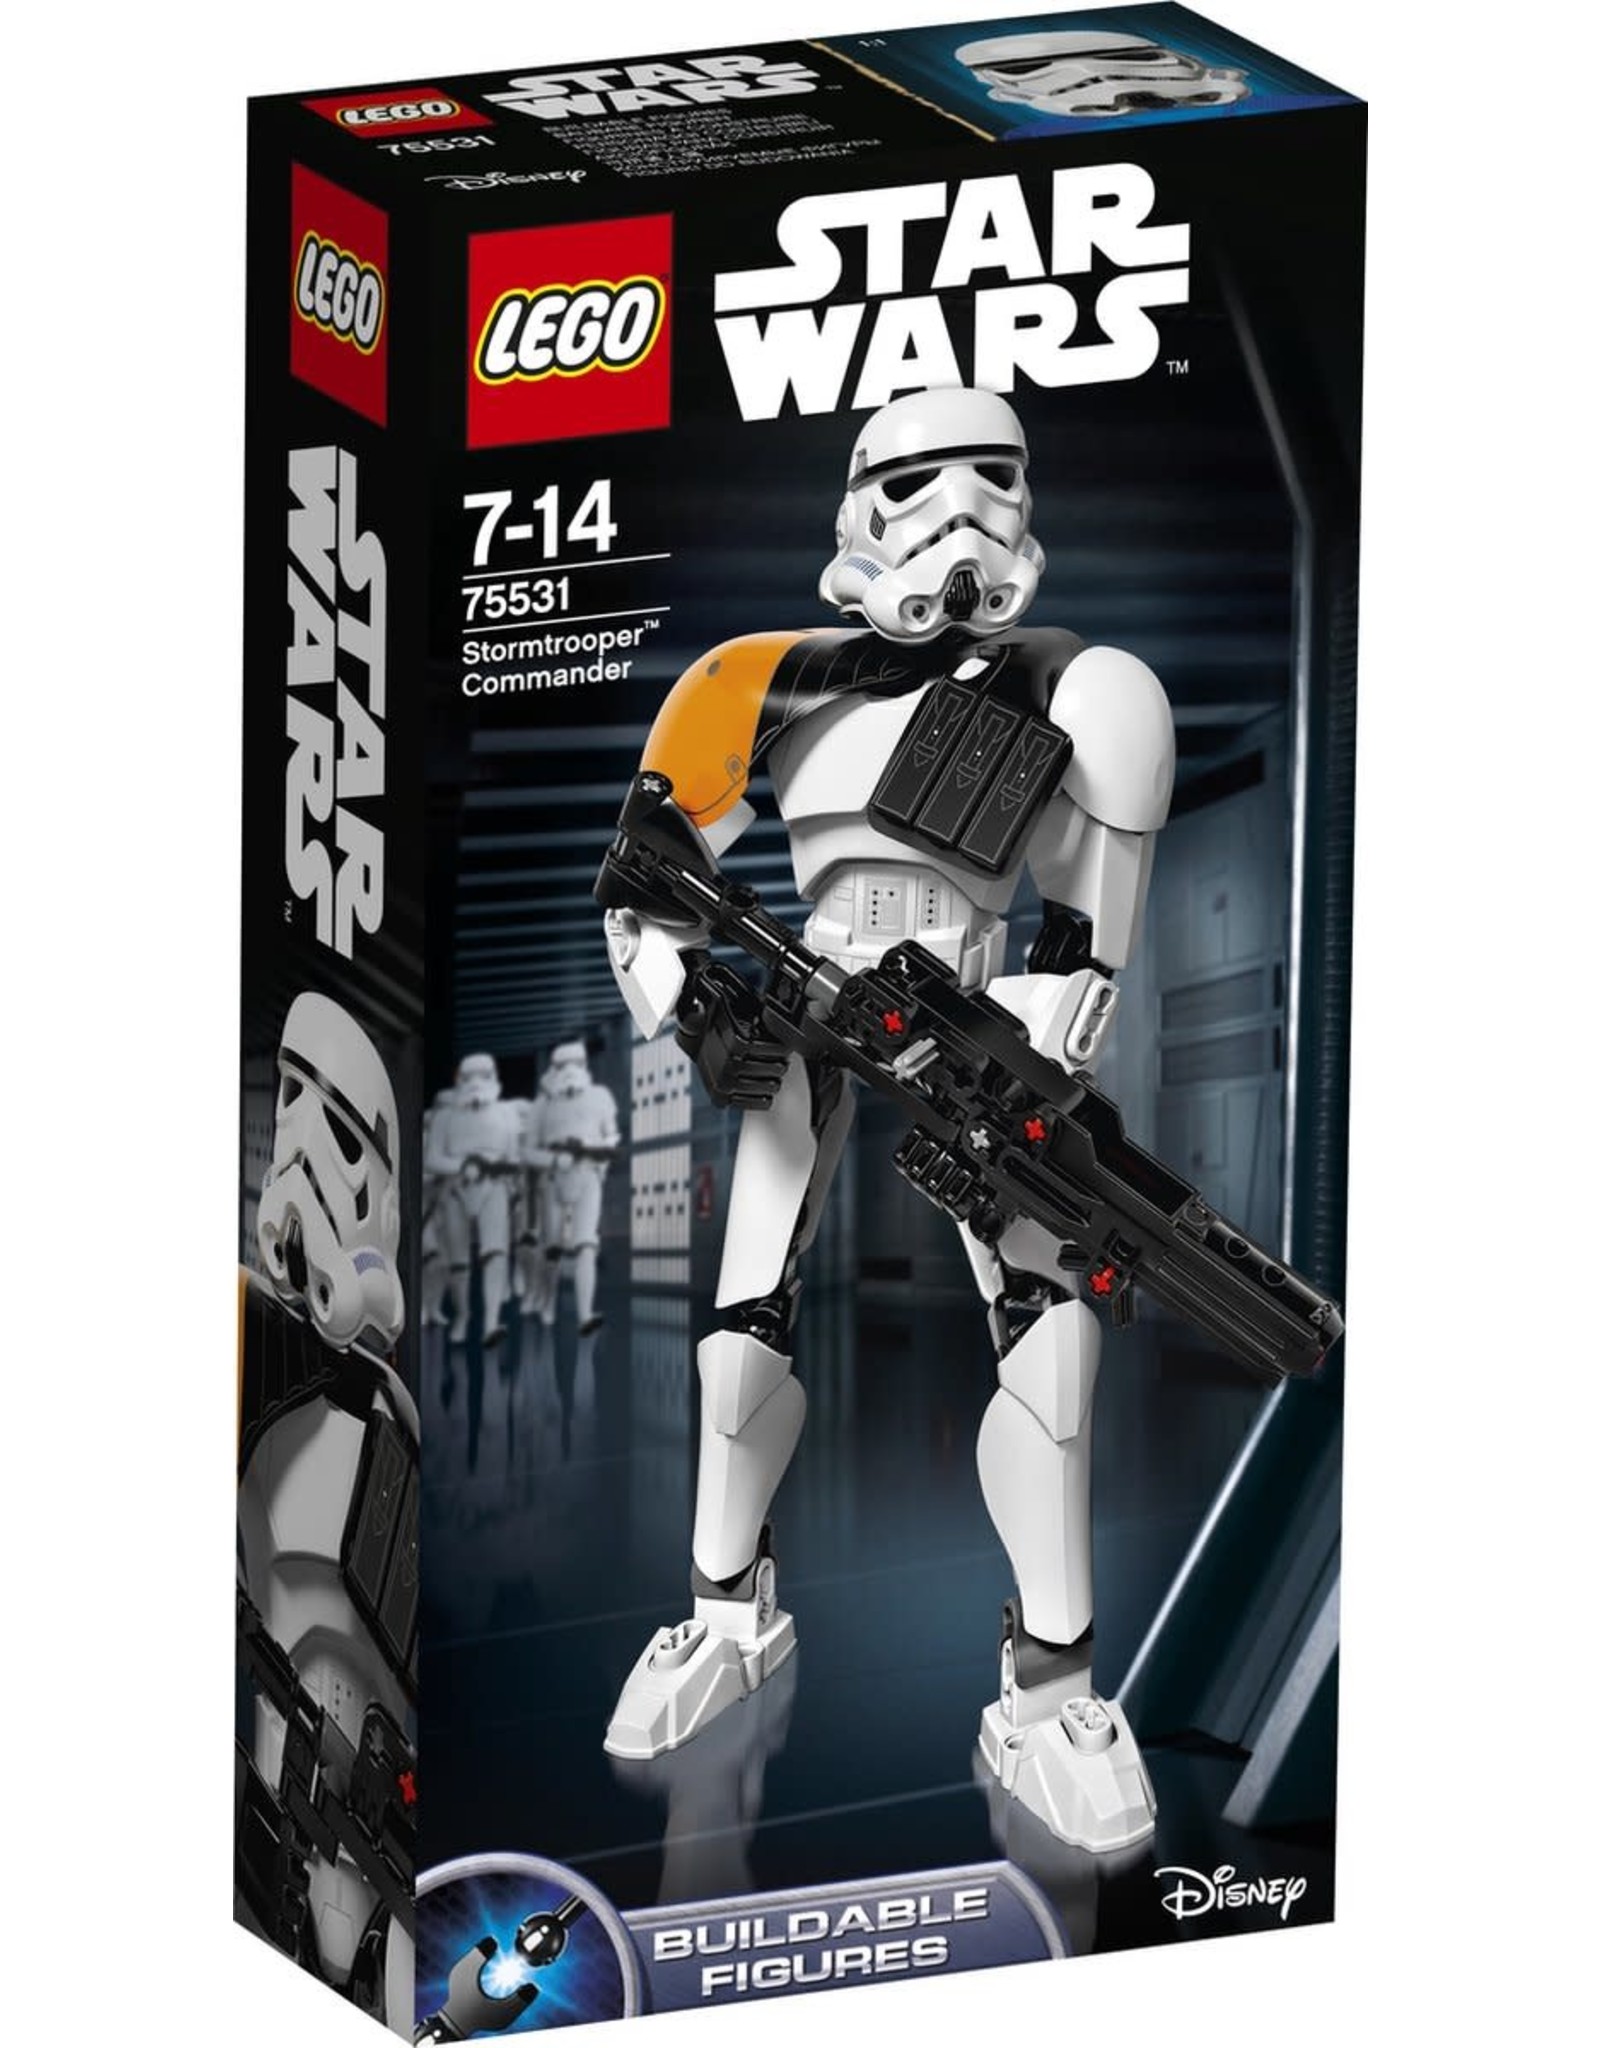 LEGO Lego Star Wars 75531 Stormtrooper Commander